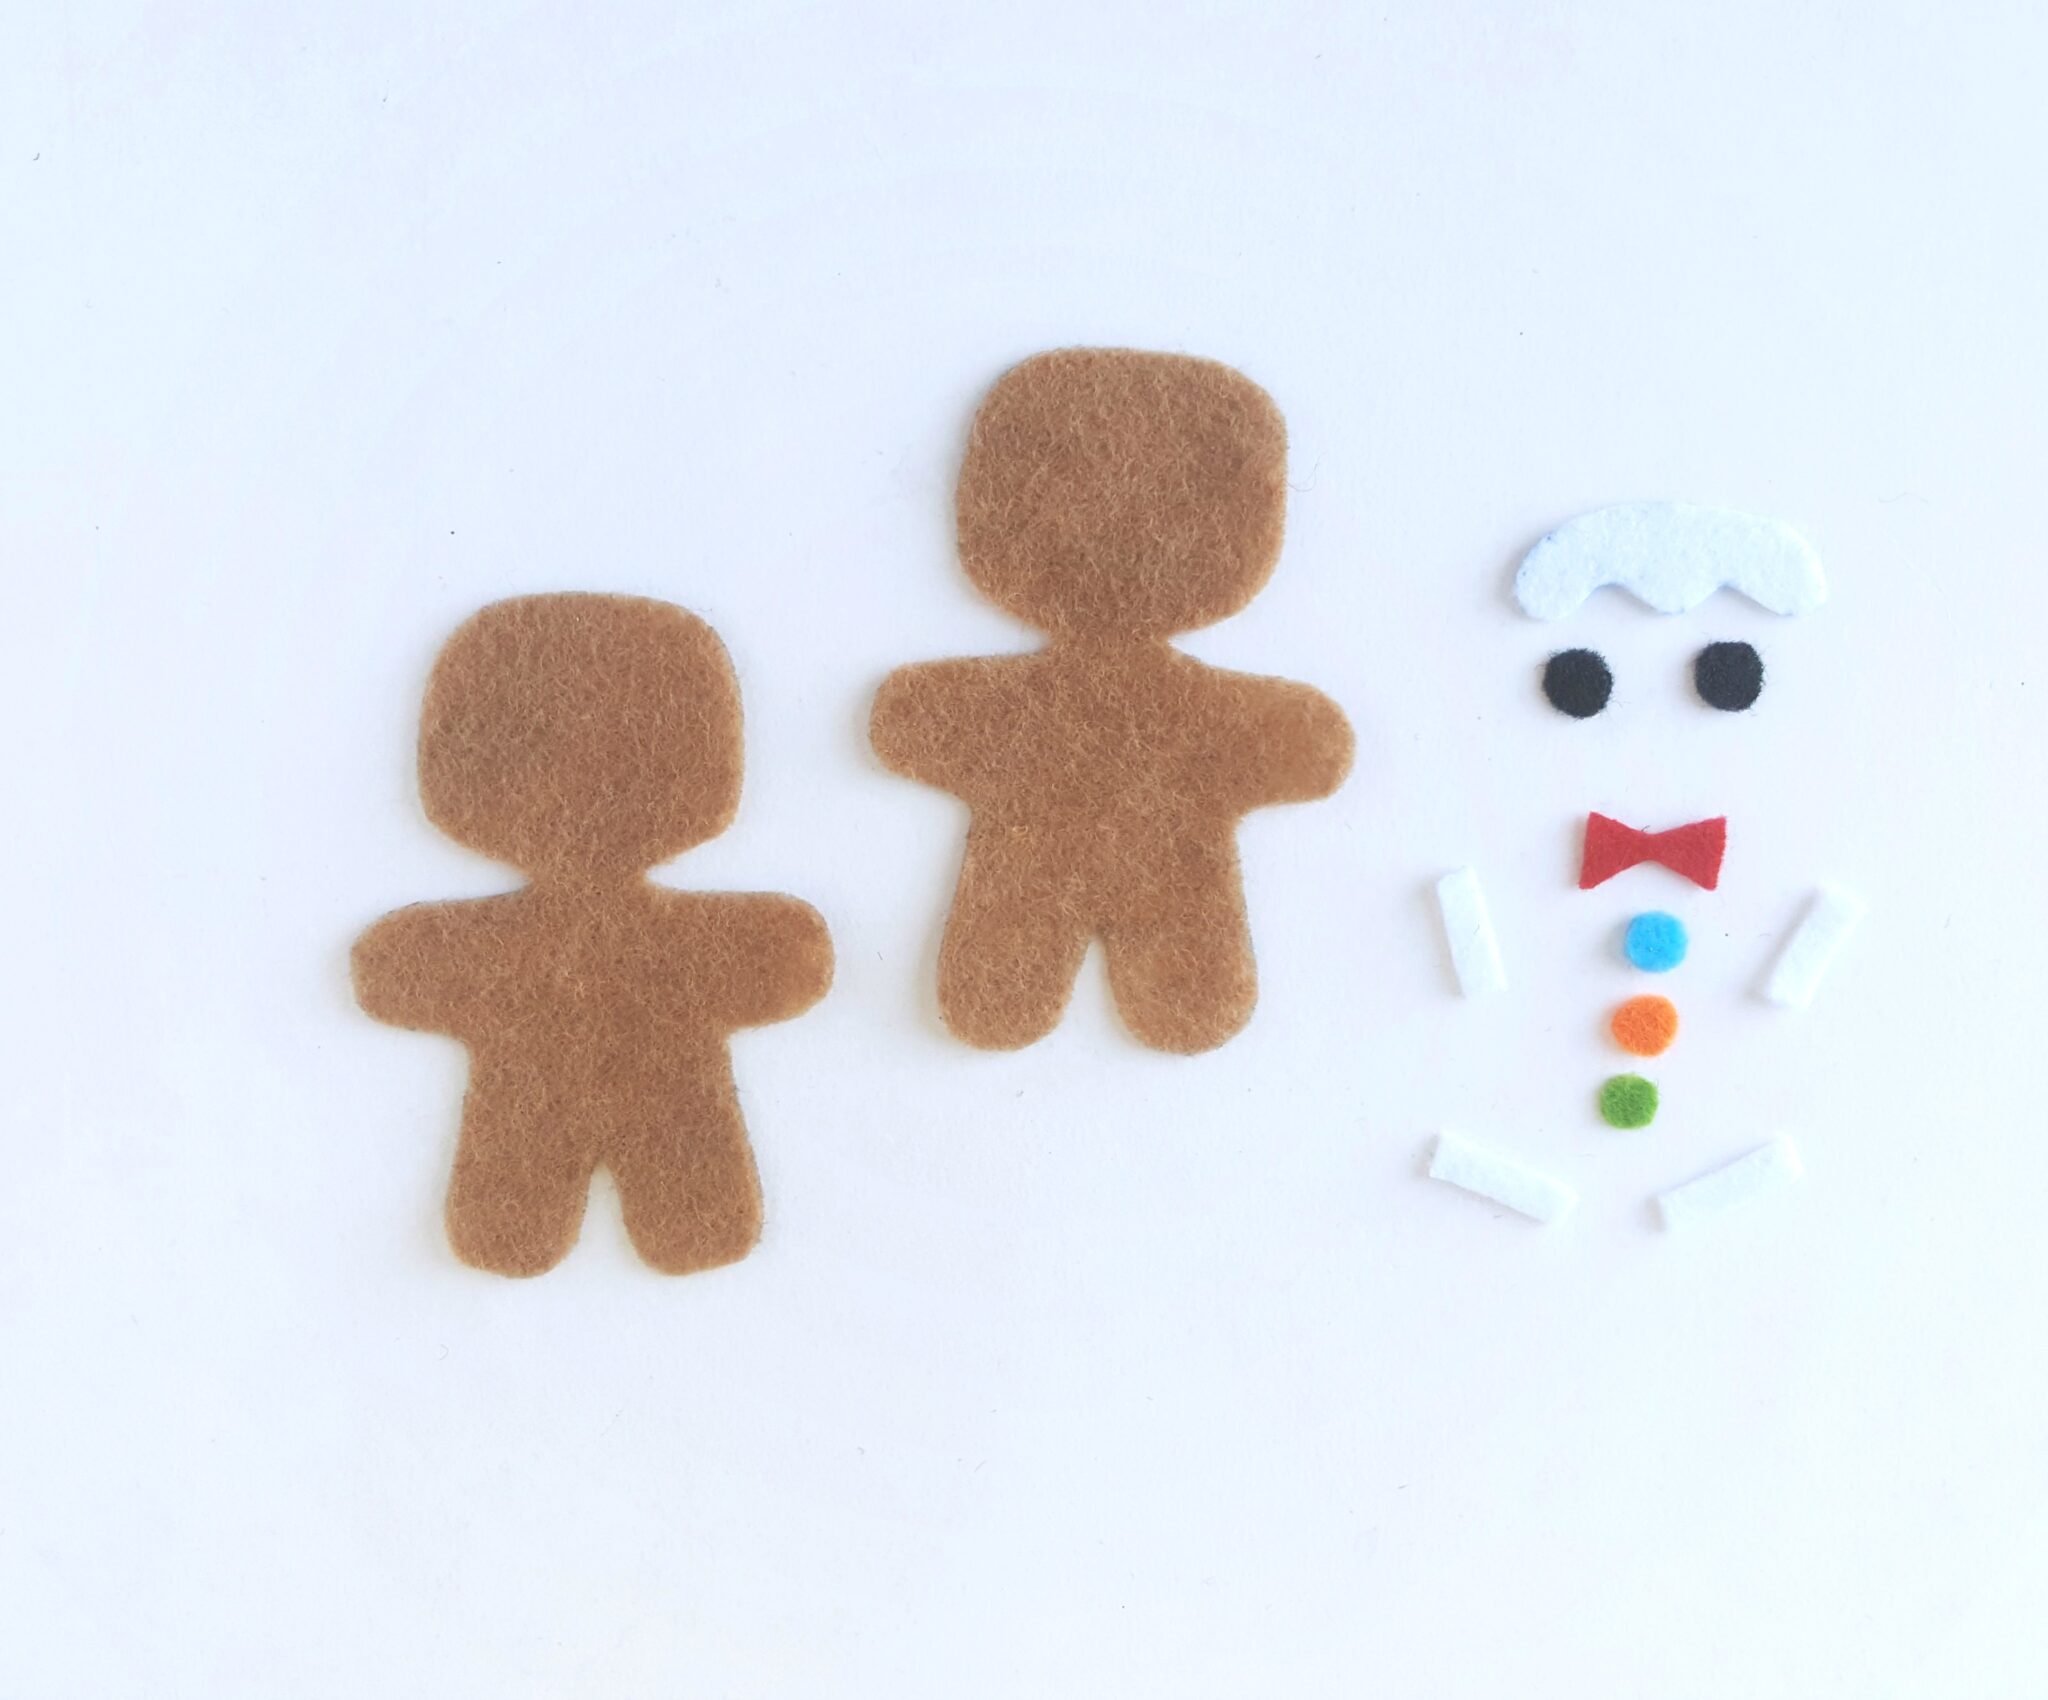 Gingerbread Man cutouts in felt.